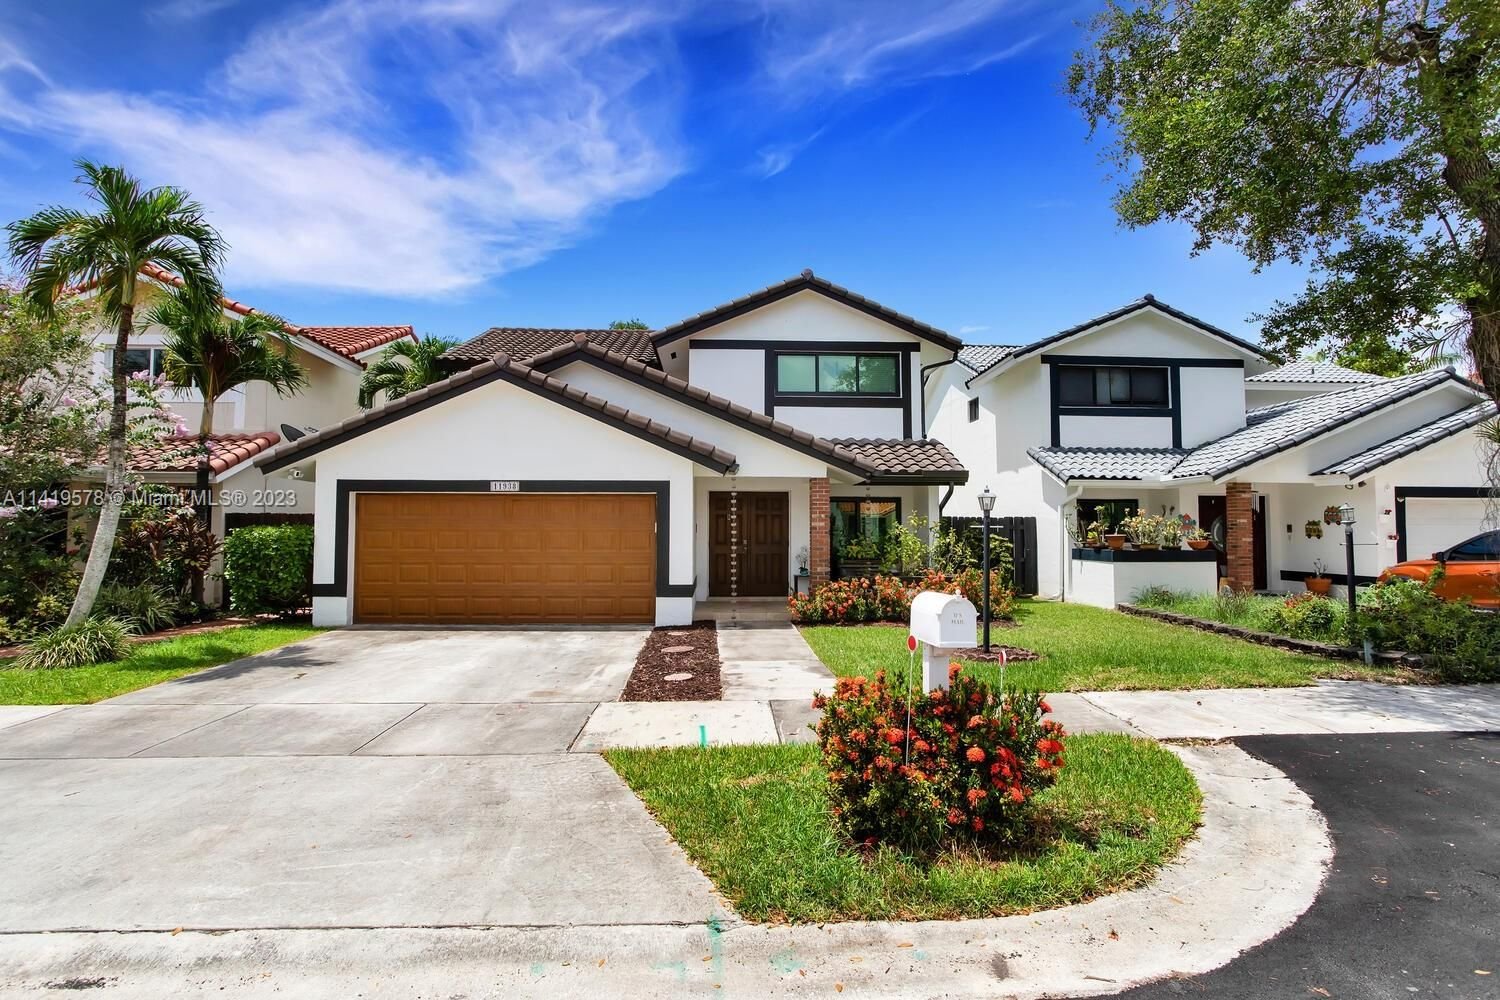 Real estate property located at 11938 79th Ter, Miami-Dade County, Miami, FL